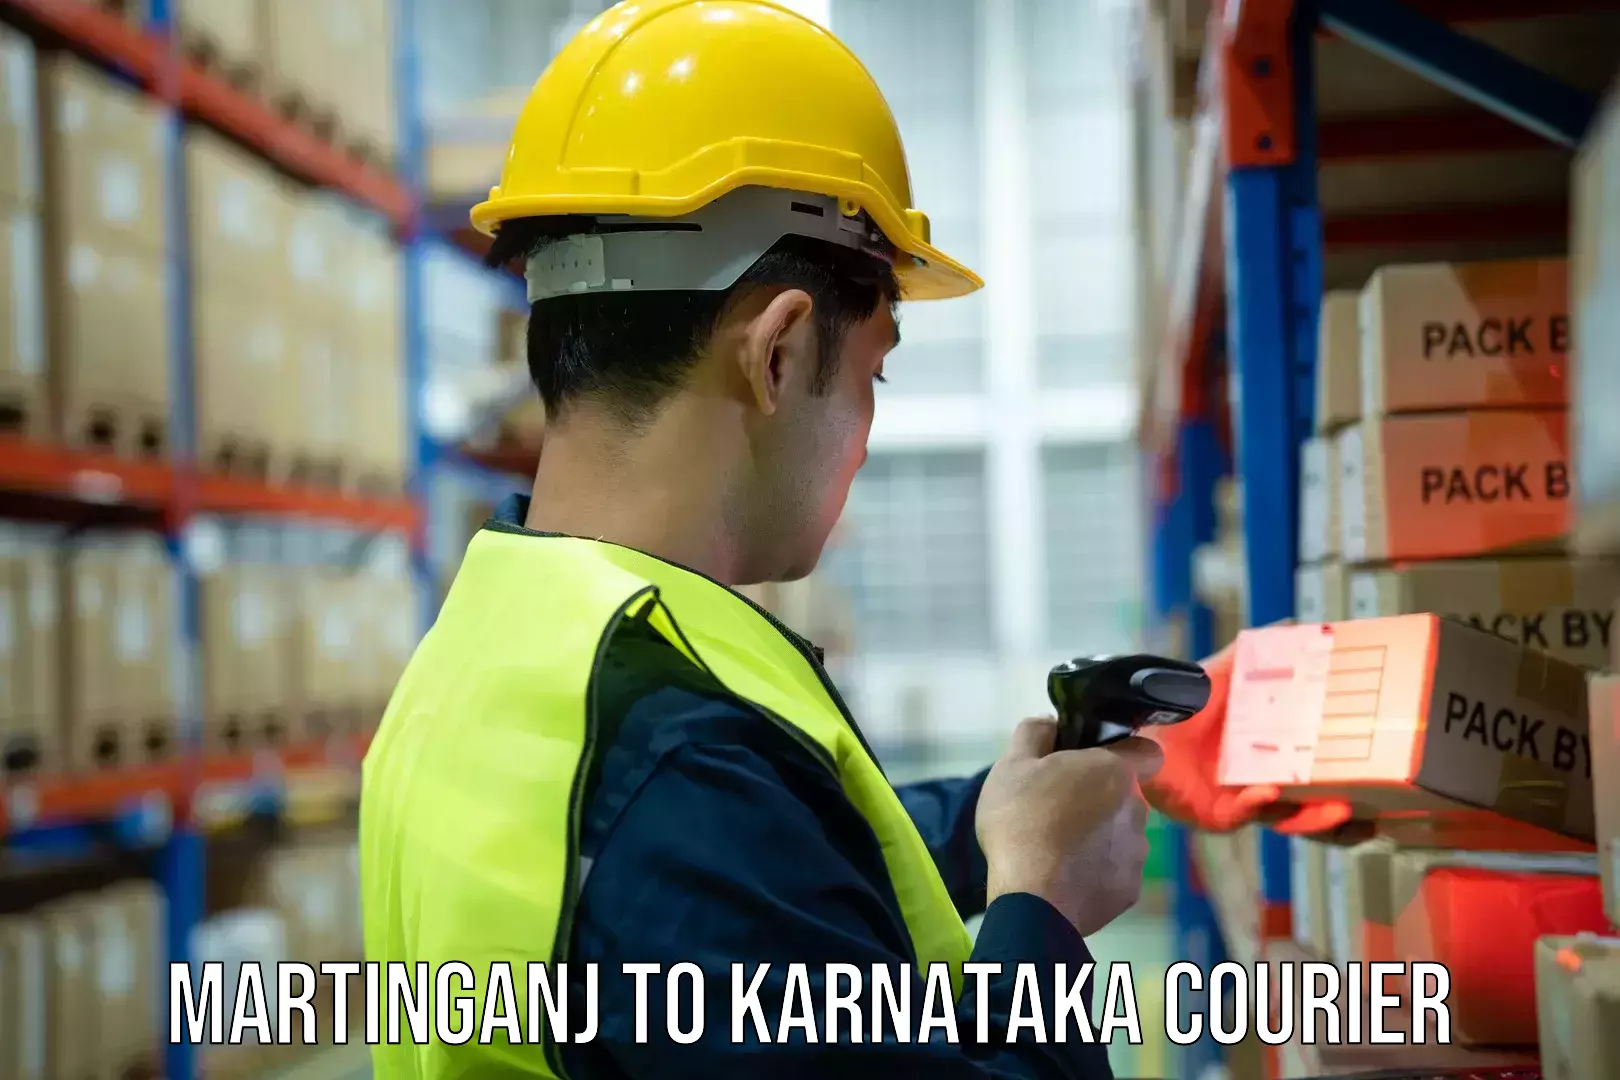 Nationwide delivery network Martinganj to Karnataka